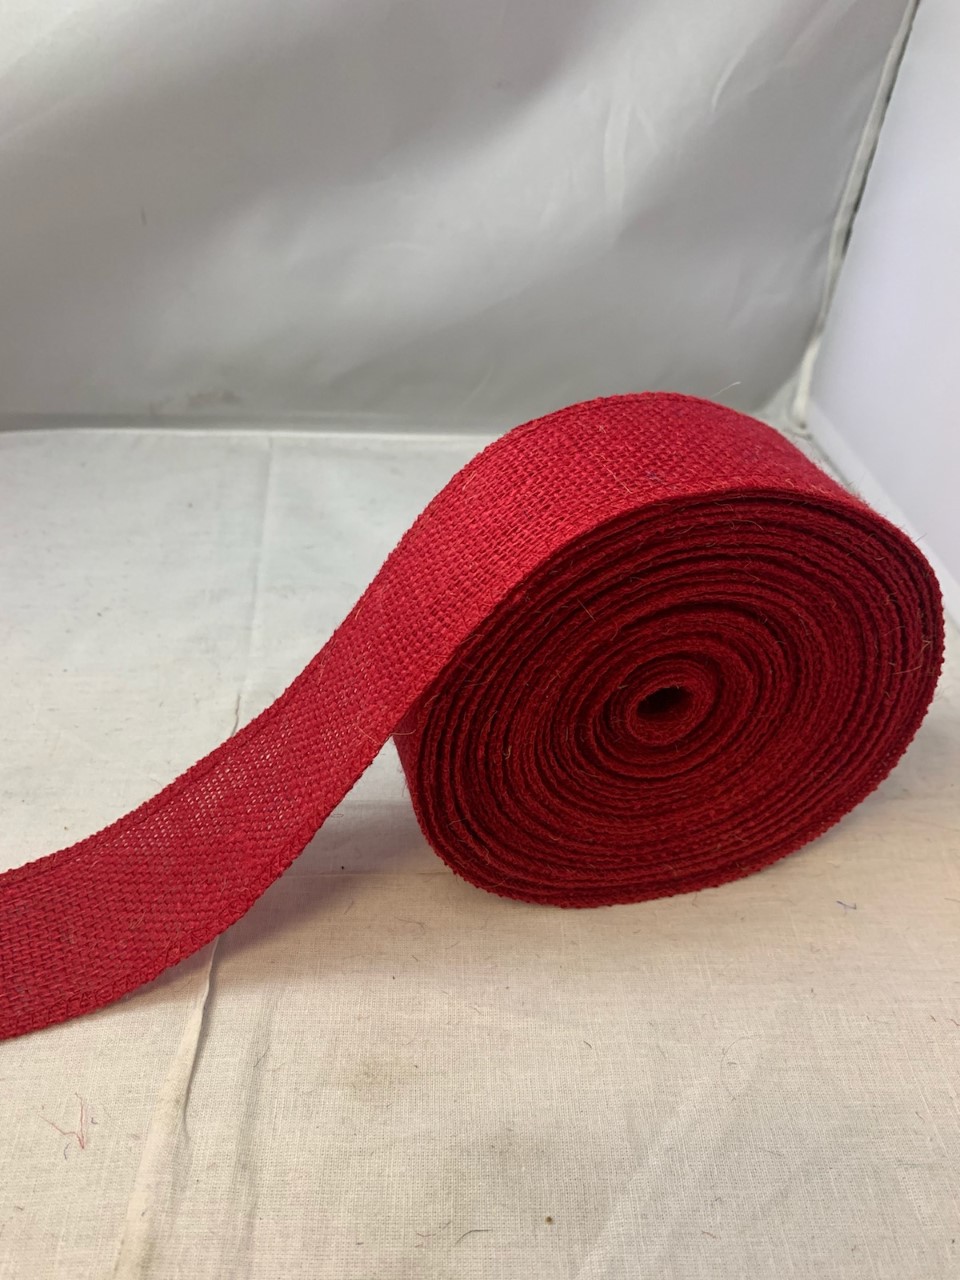 2" Red Burlap Ribbon - 10 Yards (Serged) Made in USA